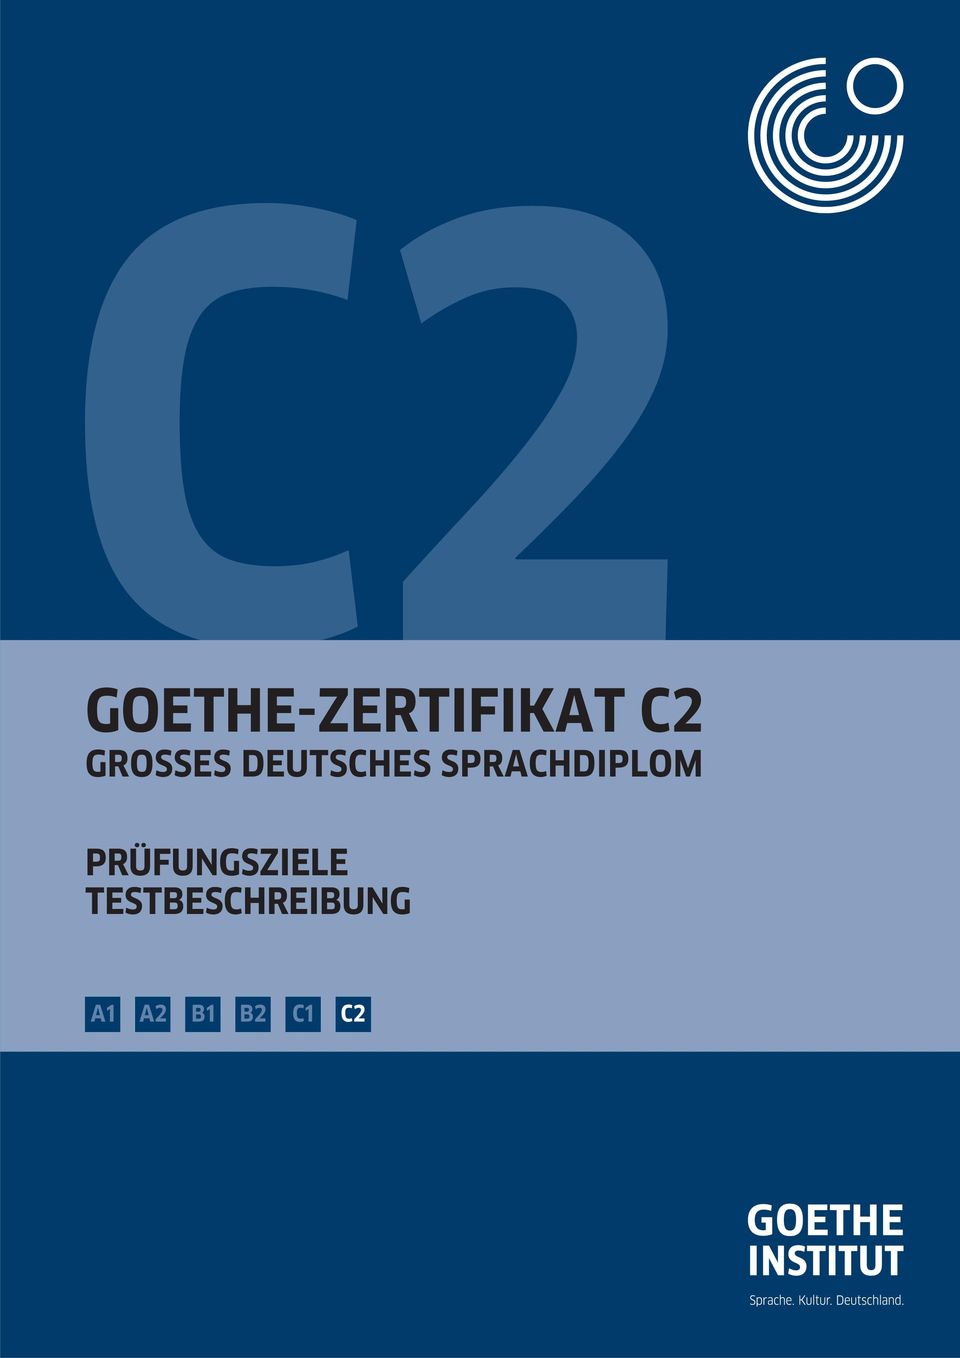 Goethe-Zertifikat C2: GDS